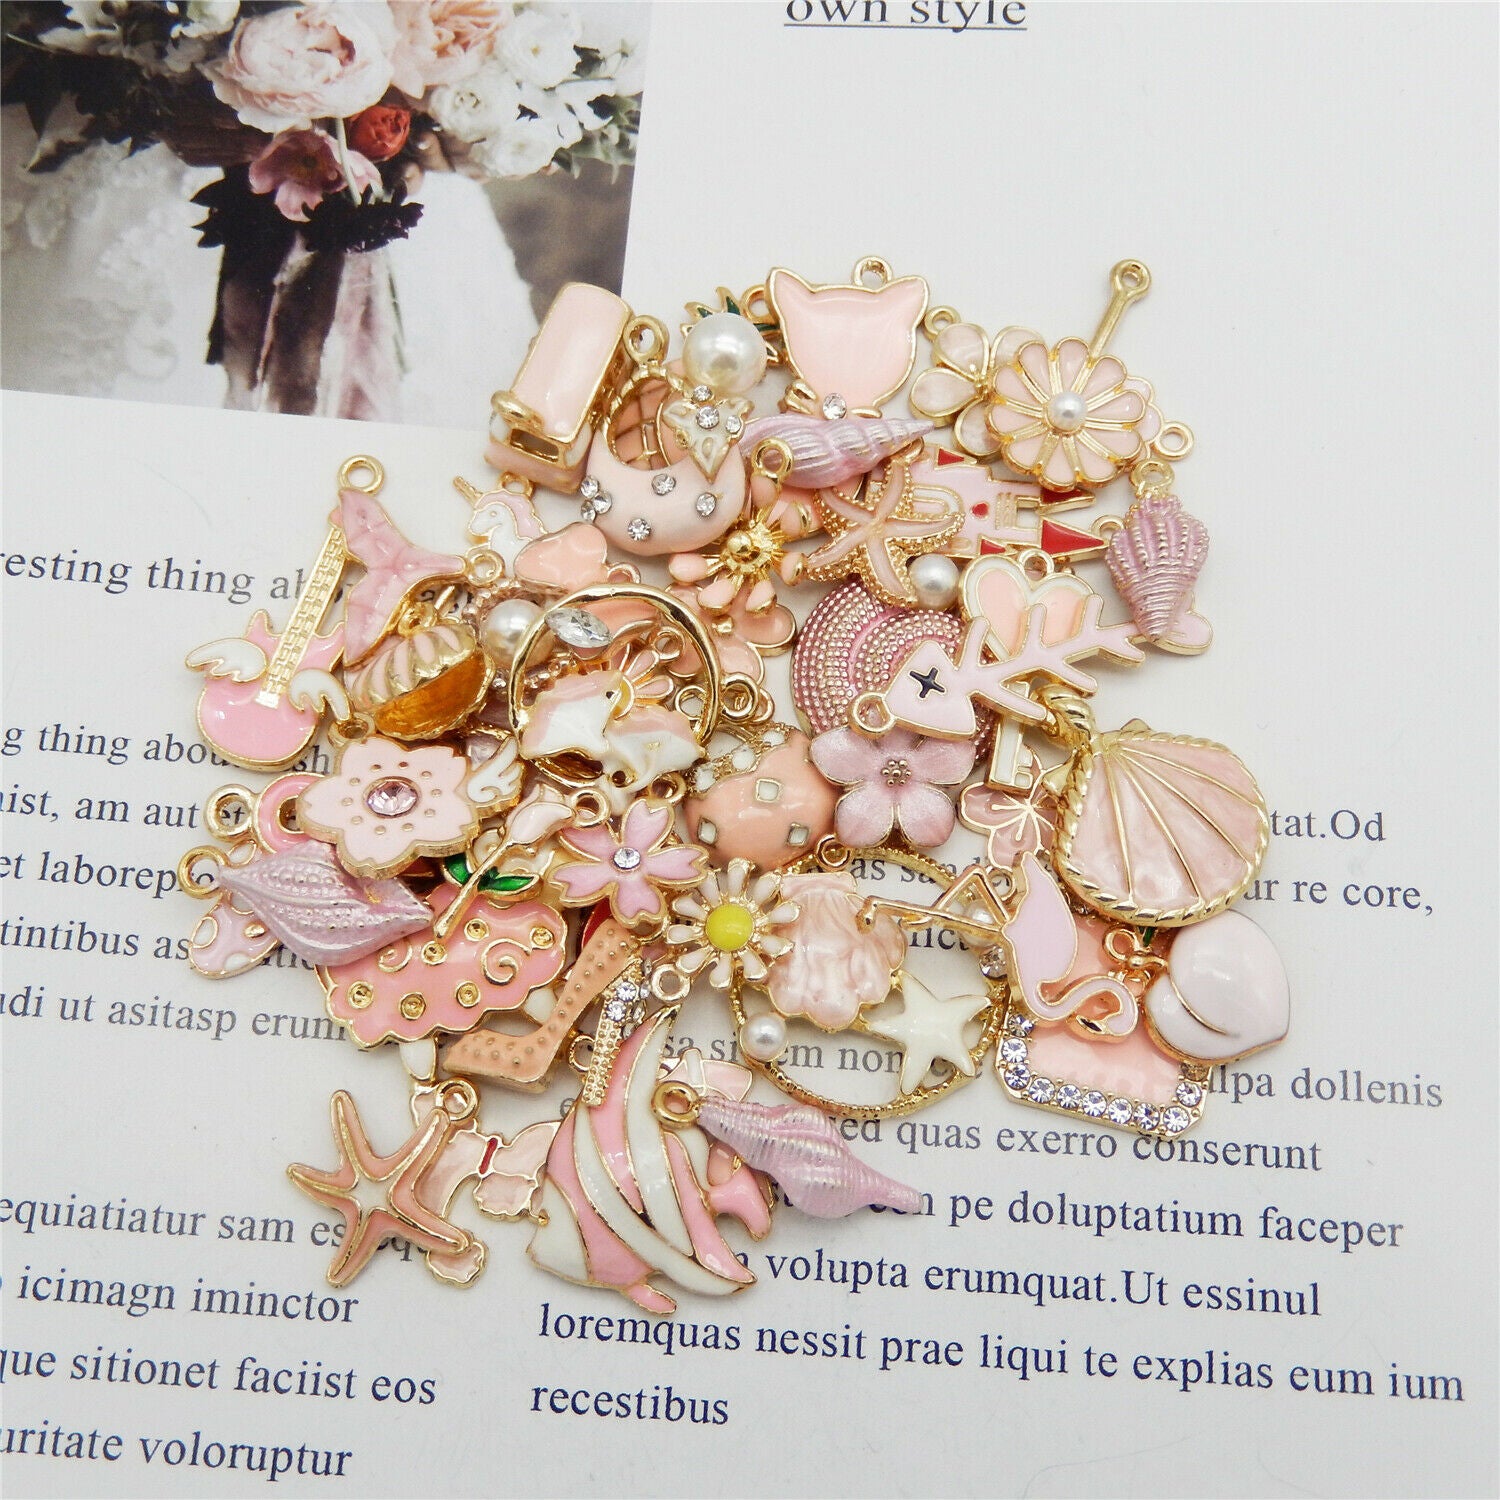 10 Mix Pink Enamel Charm Alloy For Bracelet Pendant Jewelry DIY Art Craft 1-3cm